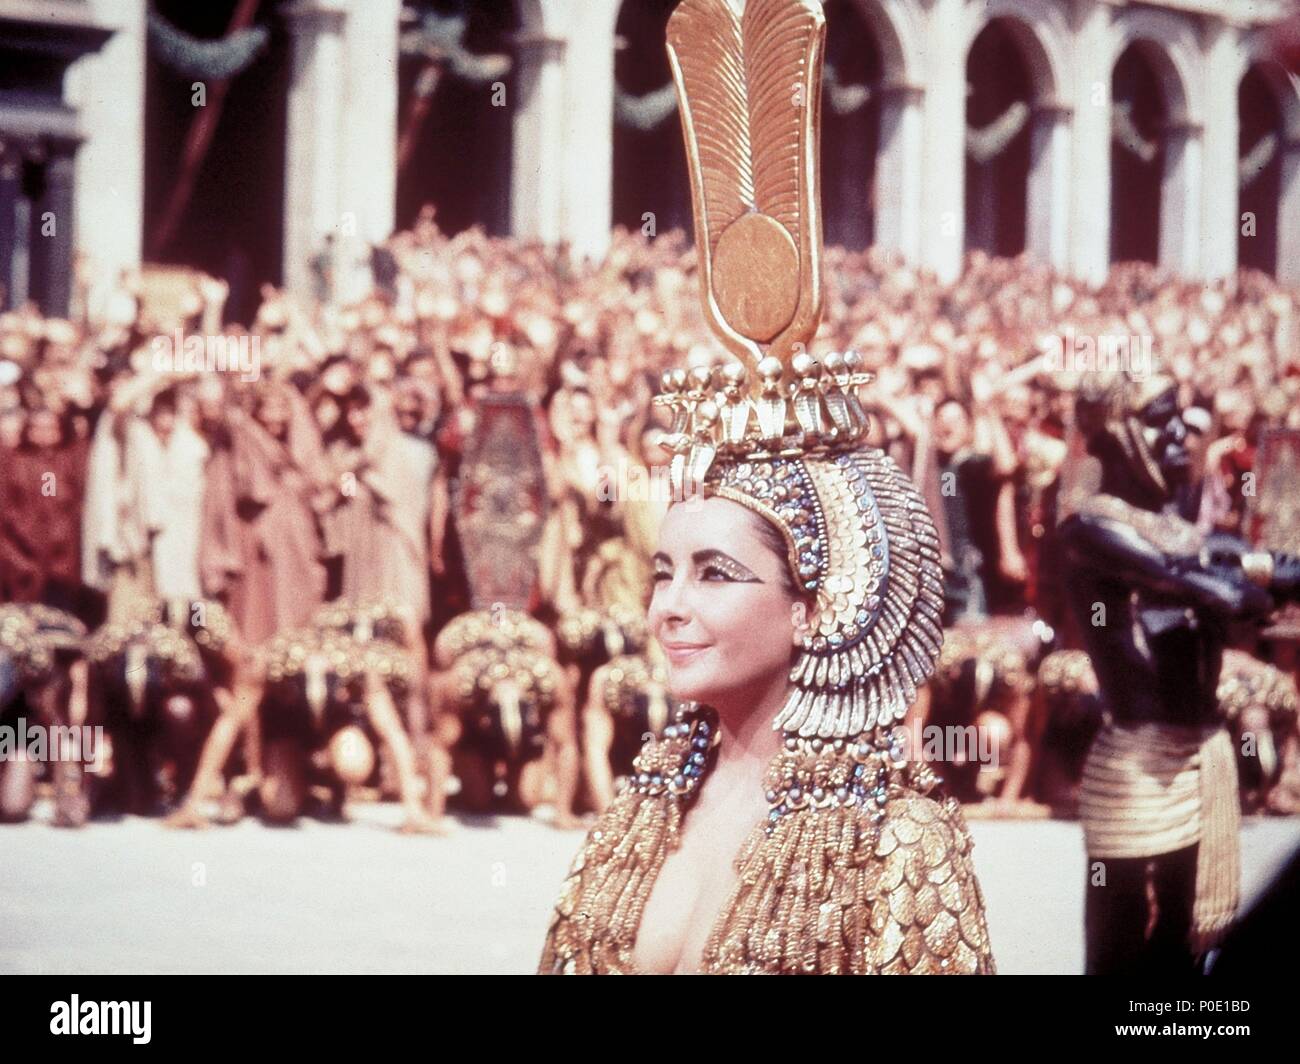 Original Film Title Cleopatra English Title Cleopatra Film Director Joseph L Mankiewicz Year 1963 Stars Cleopatra Vii Faraone Elizabeth Taylor Credit th Century Fox Album Stock Photo Alamy